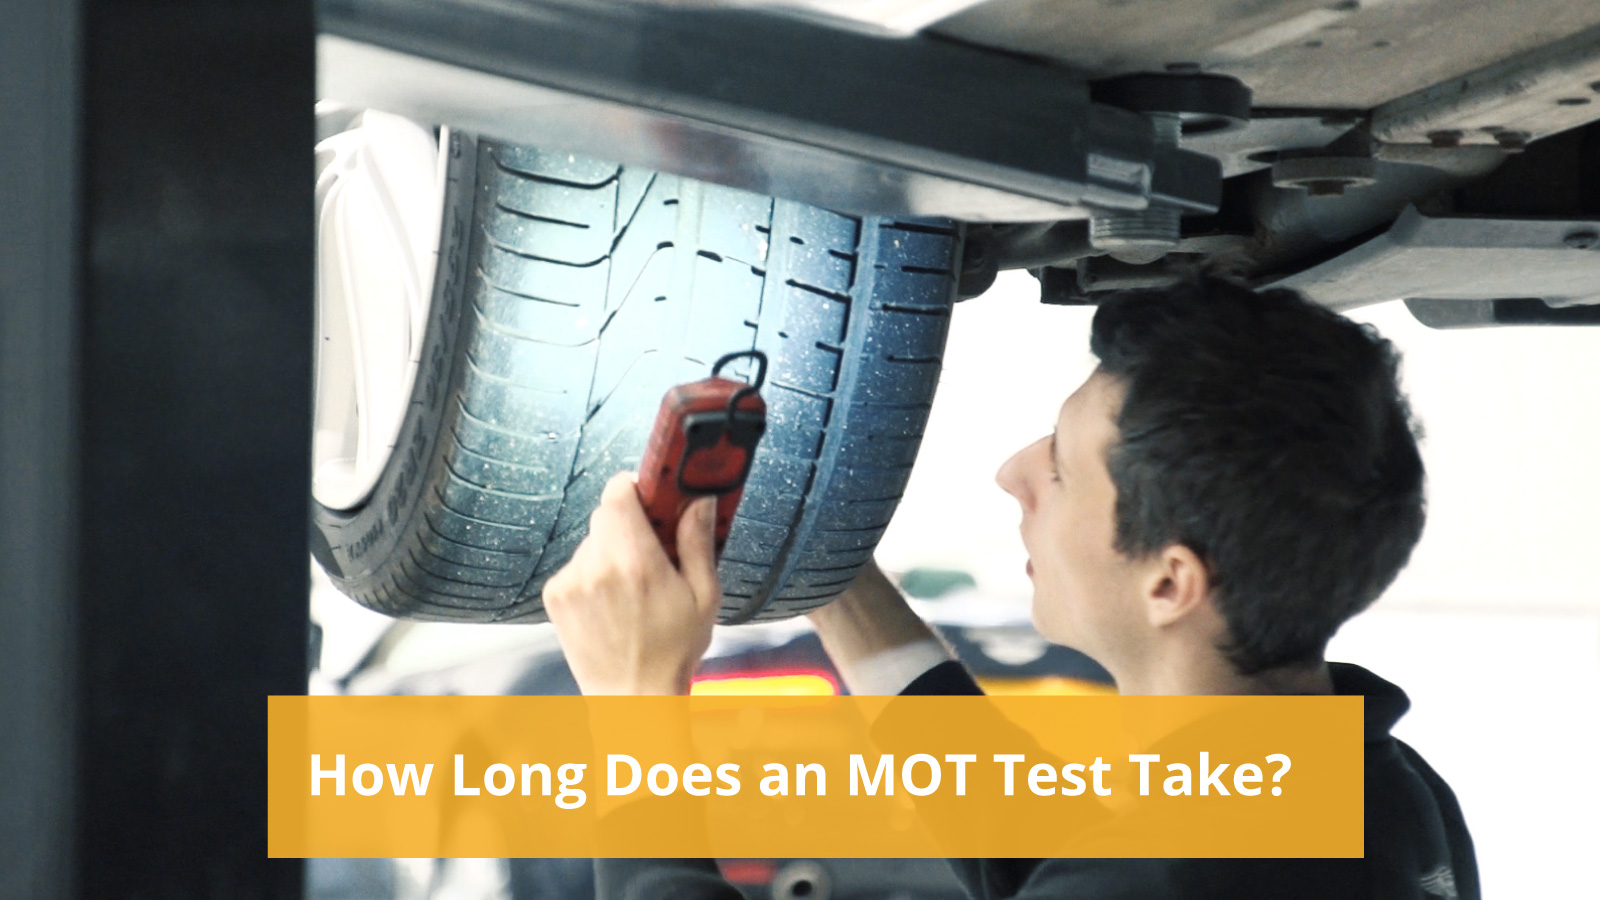 How long does an MOT test take?